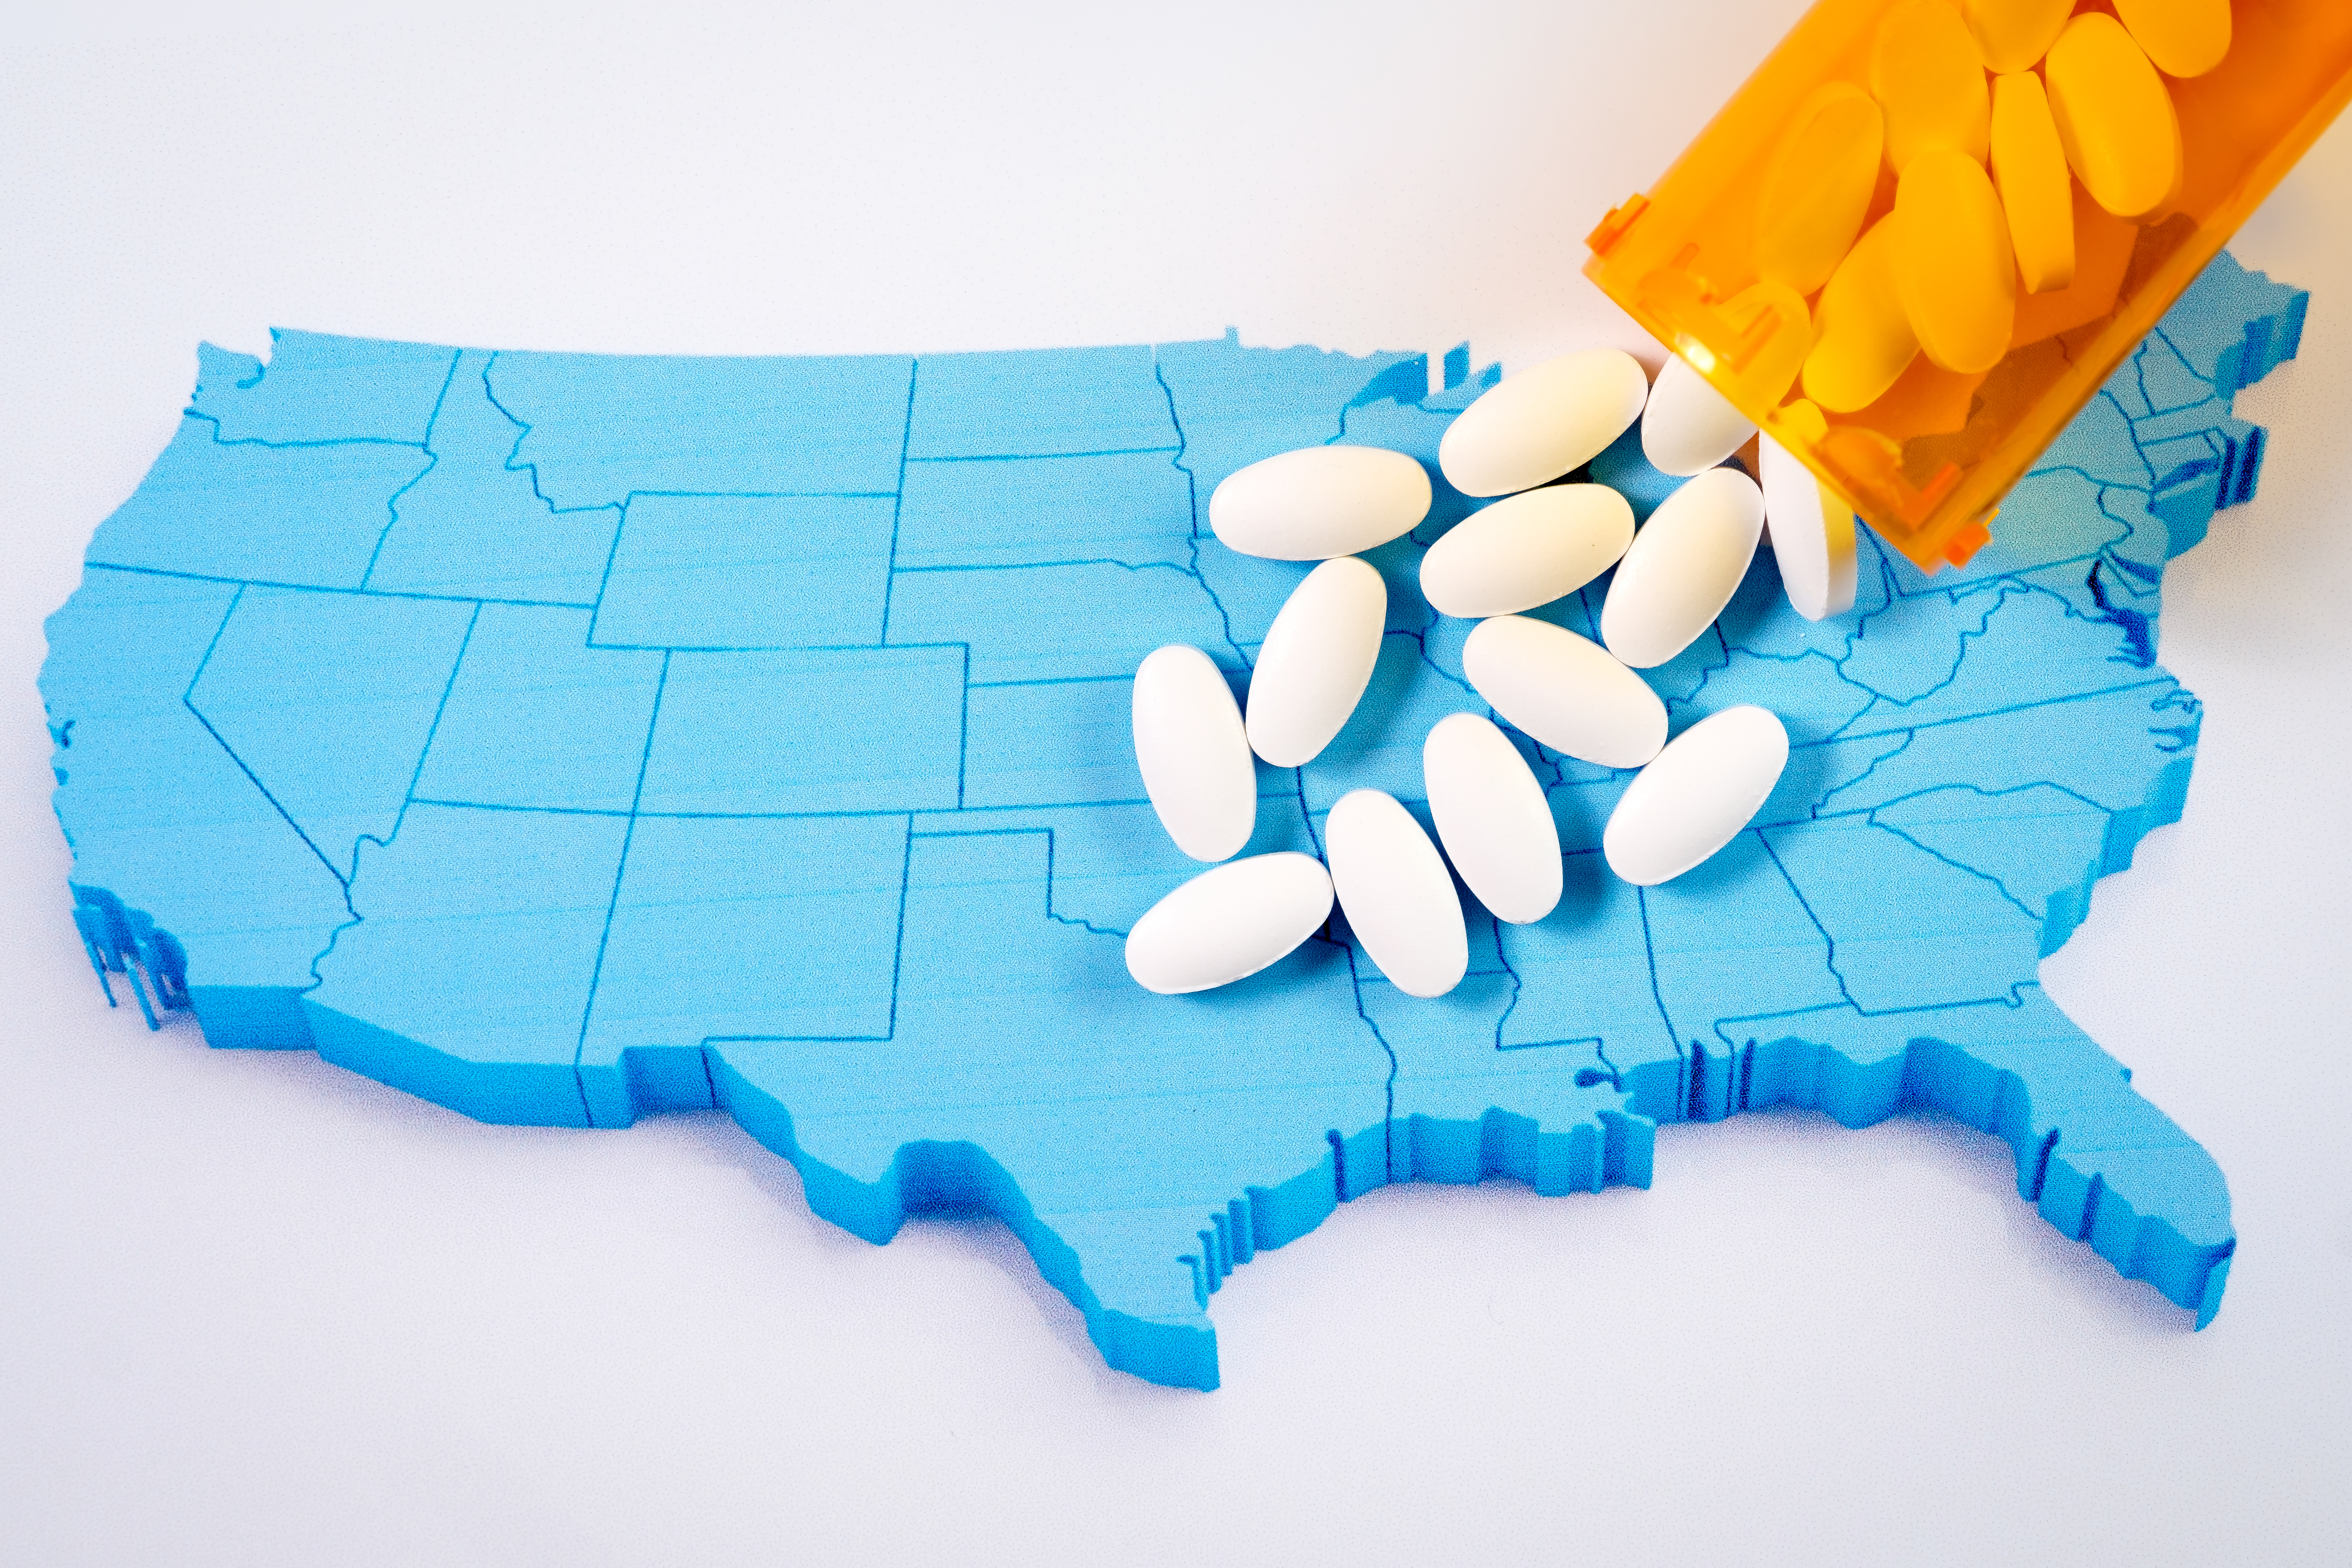 Pills are dumped on a model of the U.S. Shutterstock image via user Scotyard